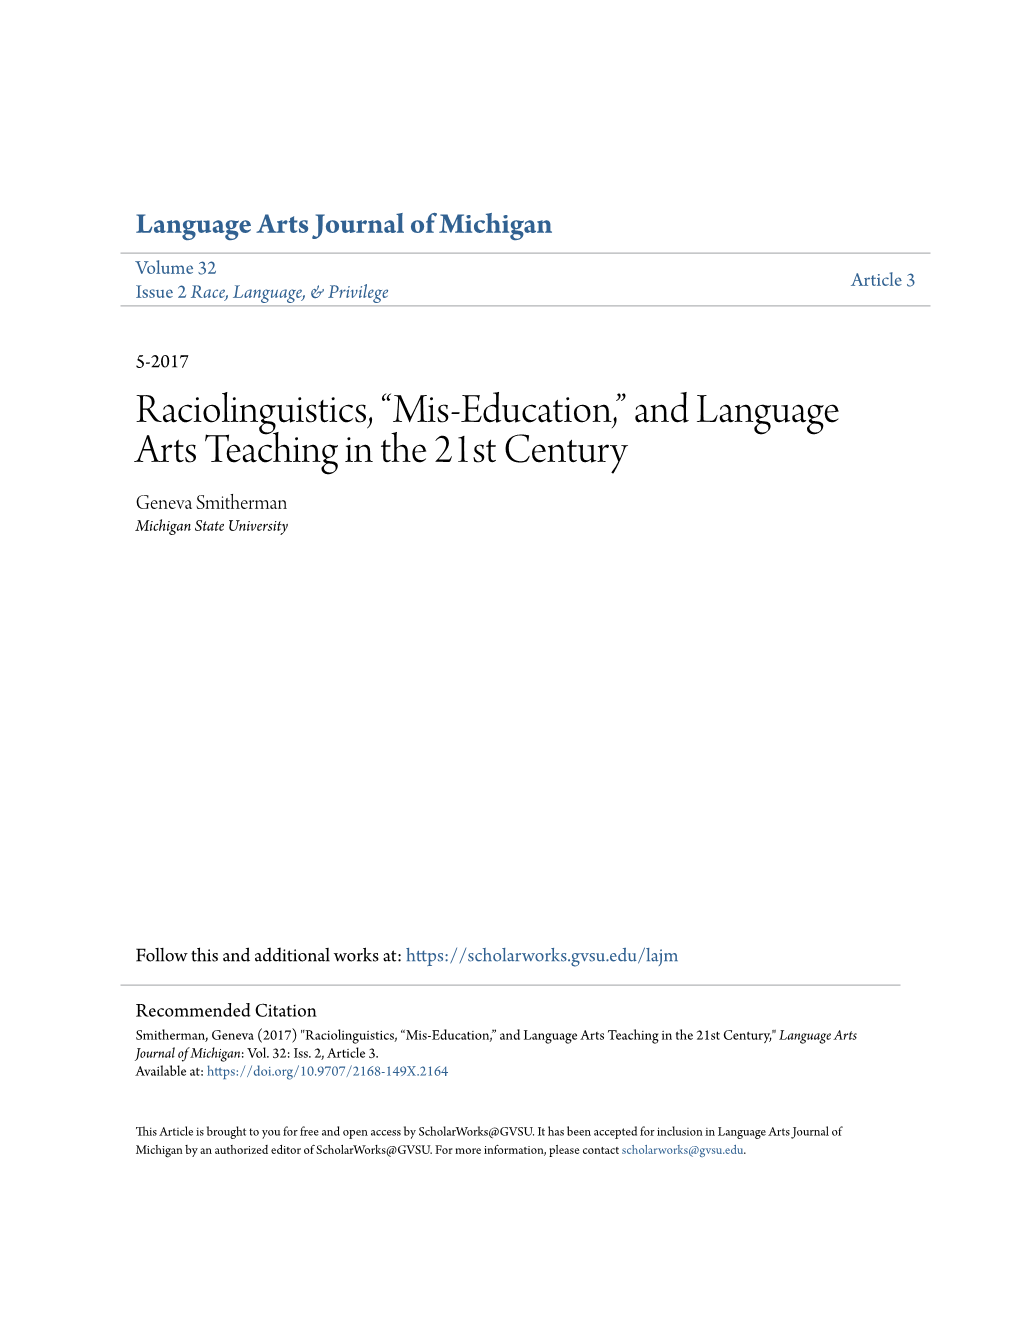 “Mis-Education,” and Language Arts Teaching in the 21St Century Geneva Smitherman Michigan State University